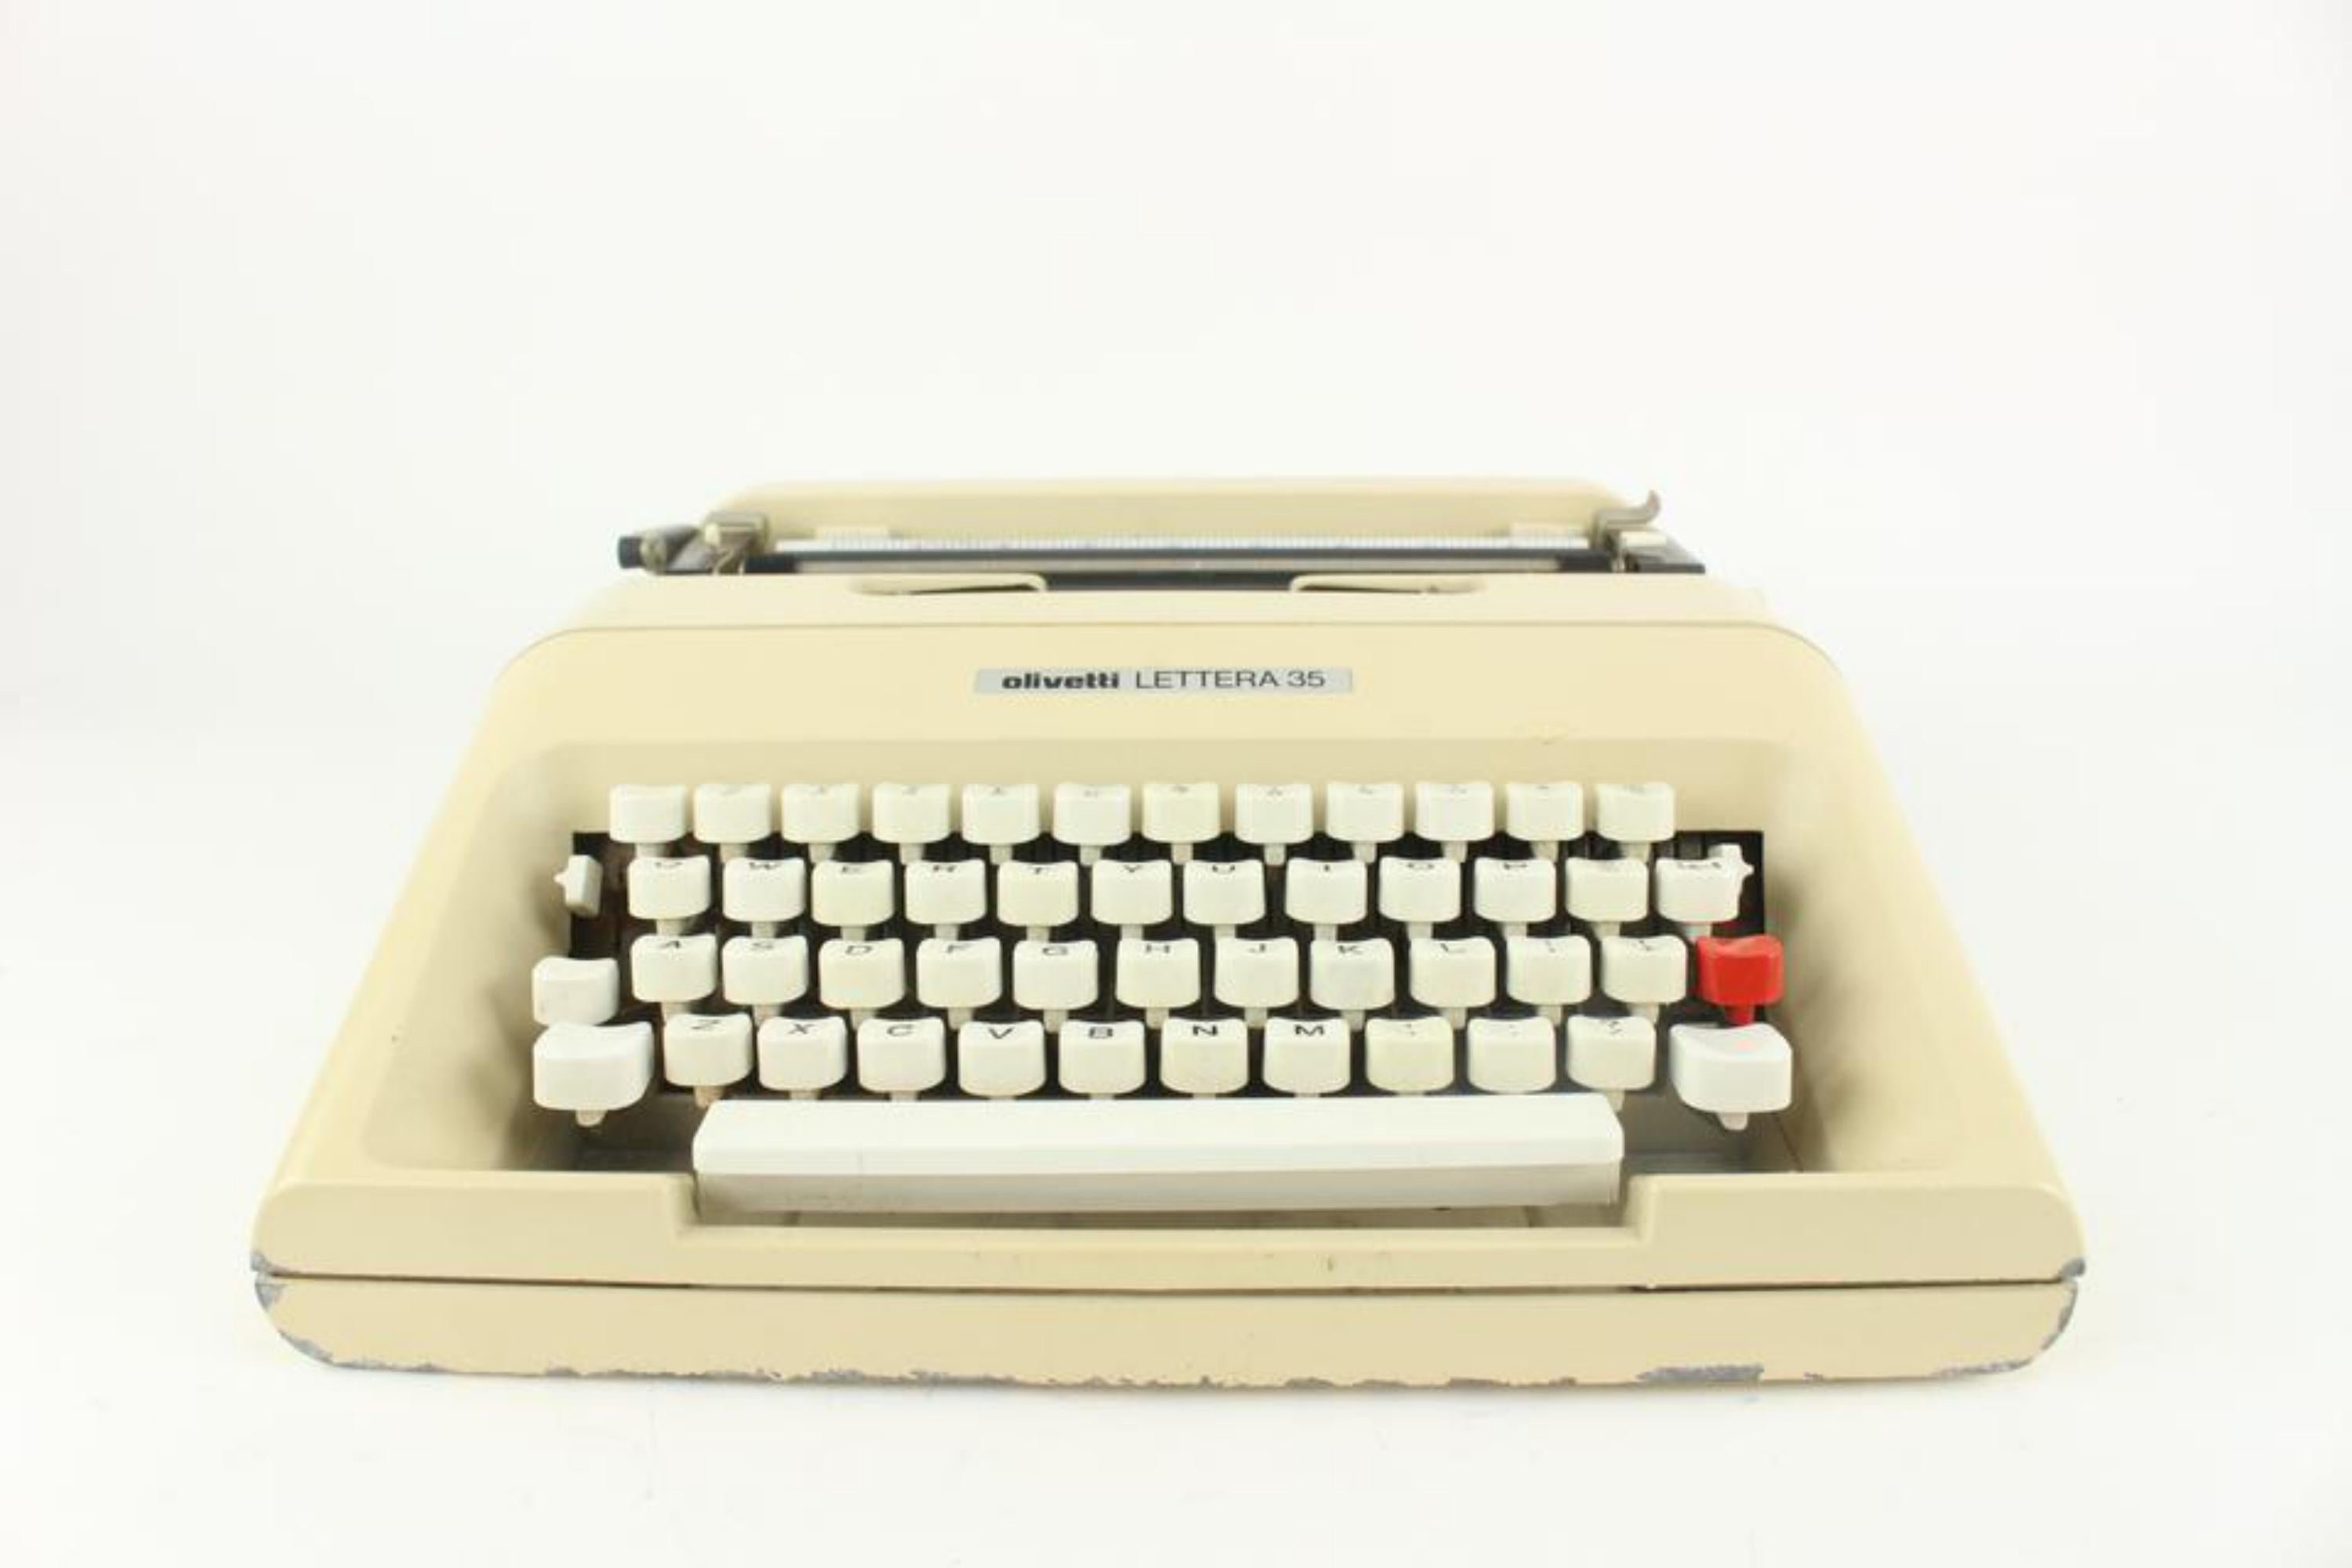 Gucci Supreme Web Typerwriter Carrying Case Olivetti Lettera 35 1217g22 2